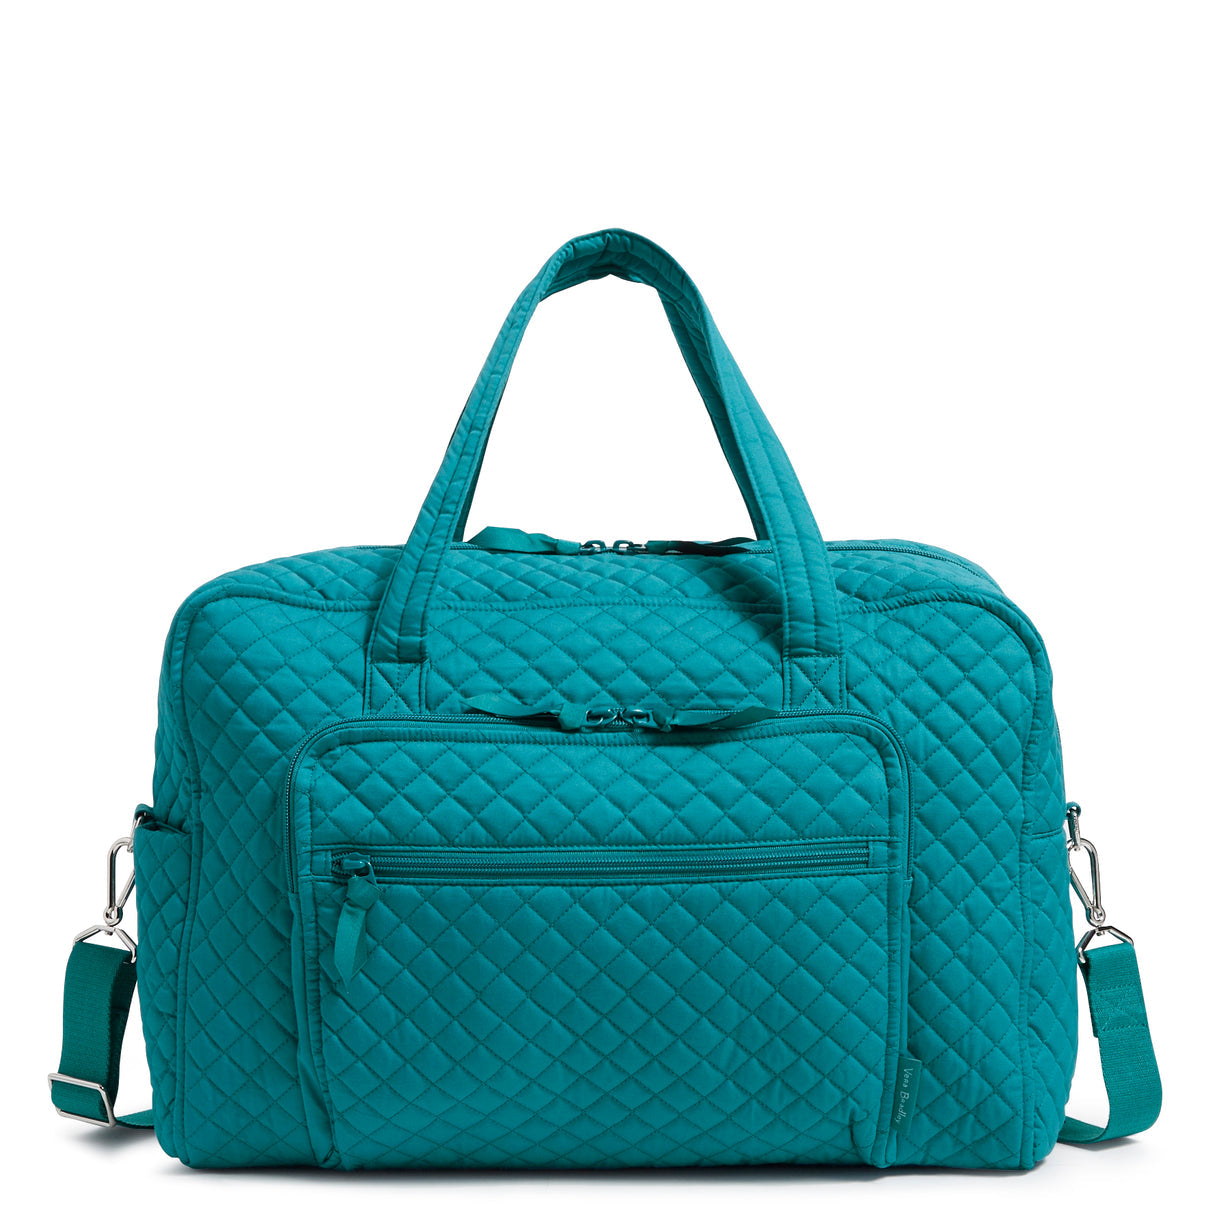 Weekender Travel Bag in Forever Green pattern.